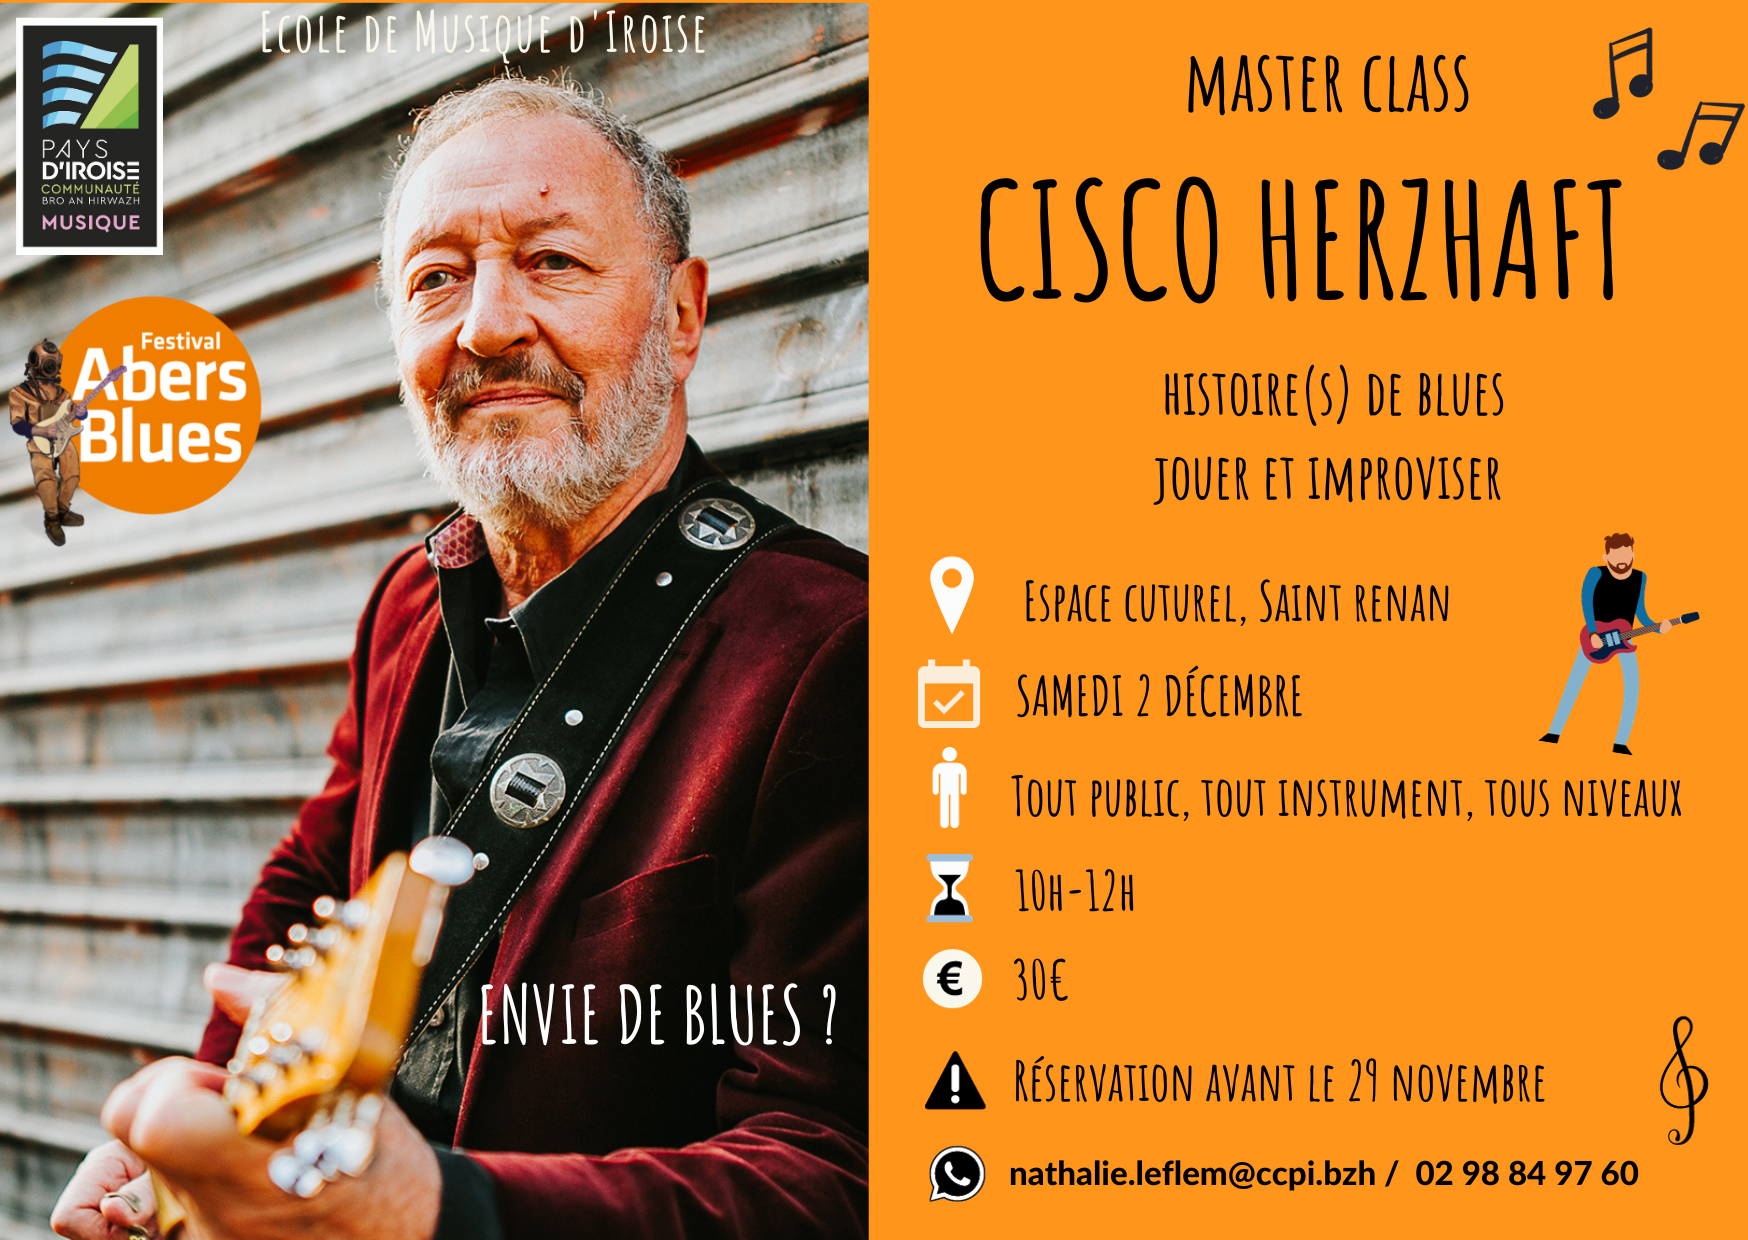 Master Class Cisco